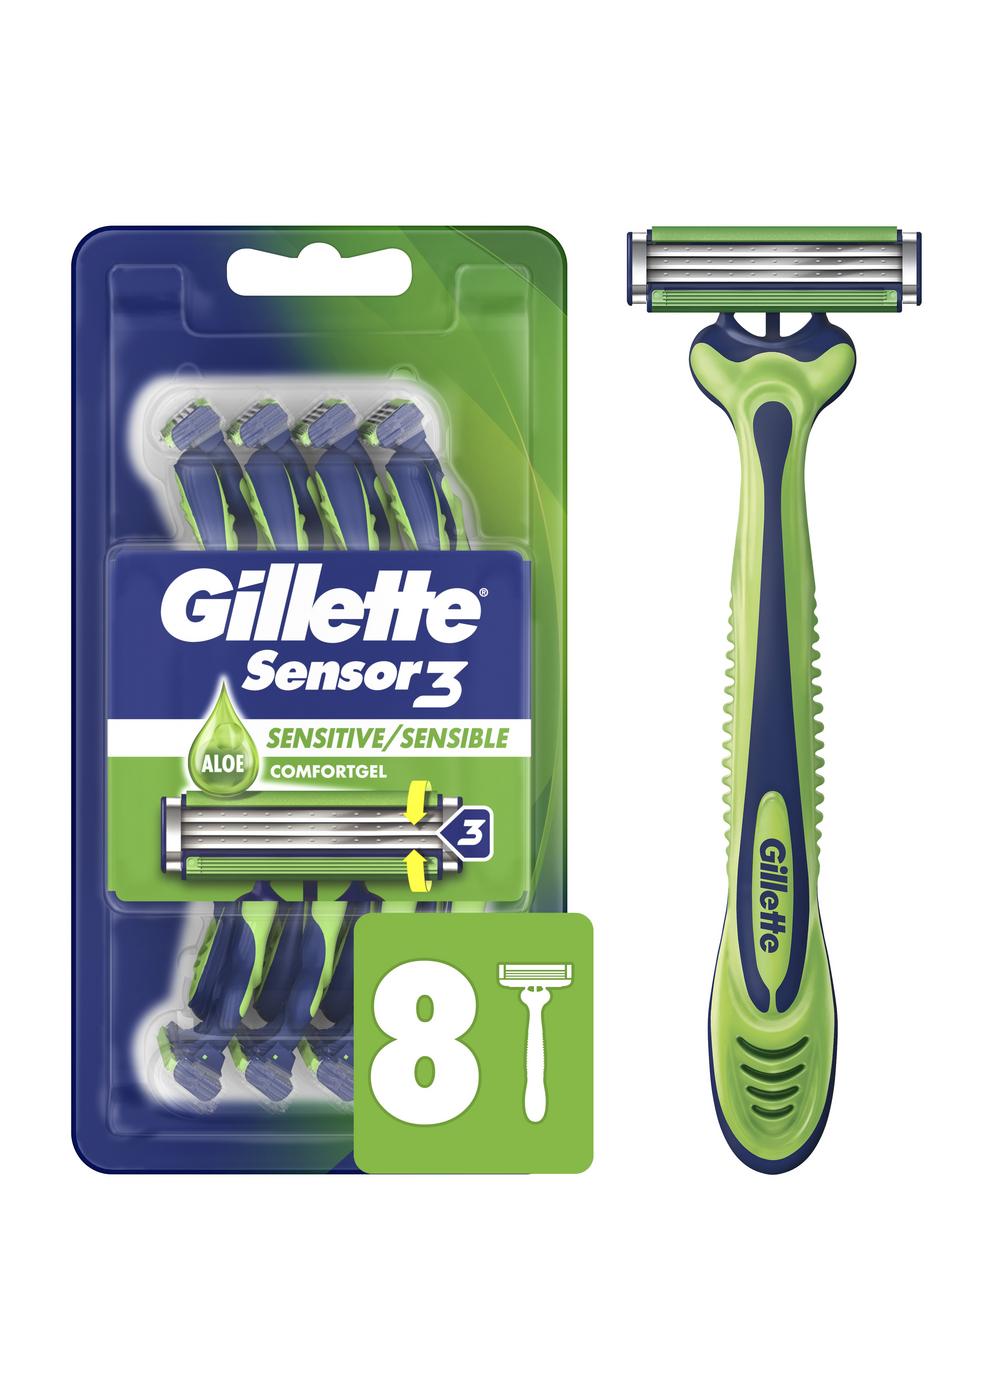 Gillette Sensor3 Sensitive Disposable Razors; image 4 of 10